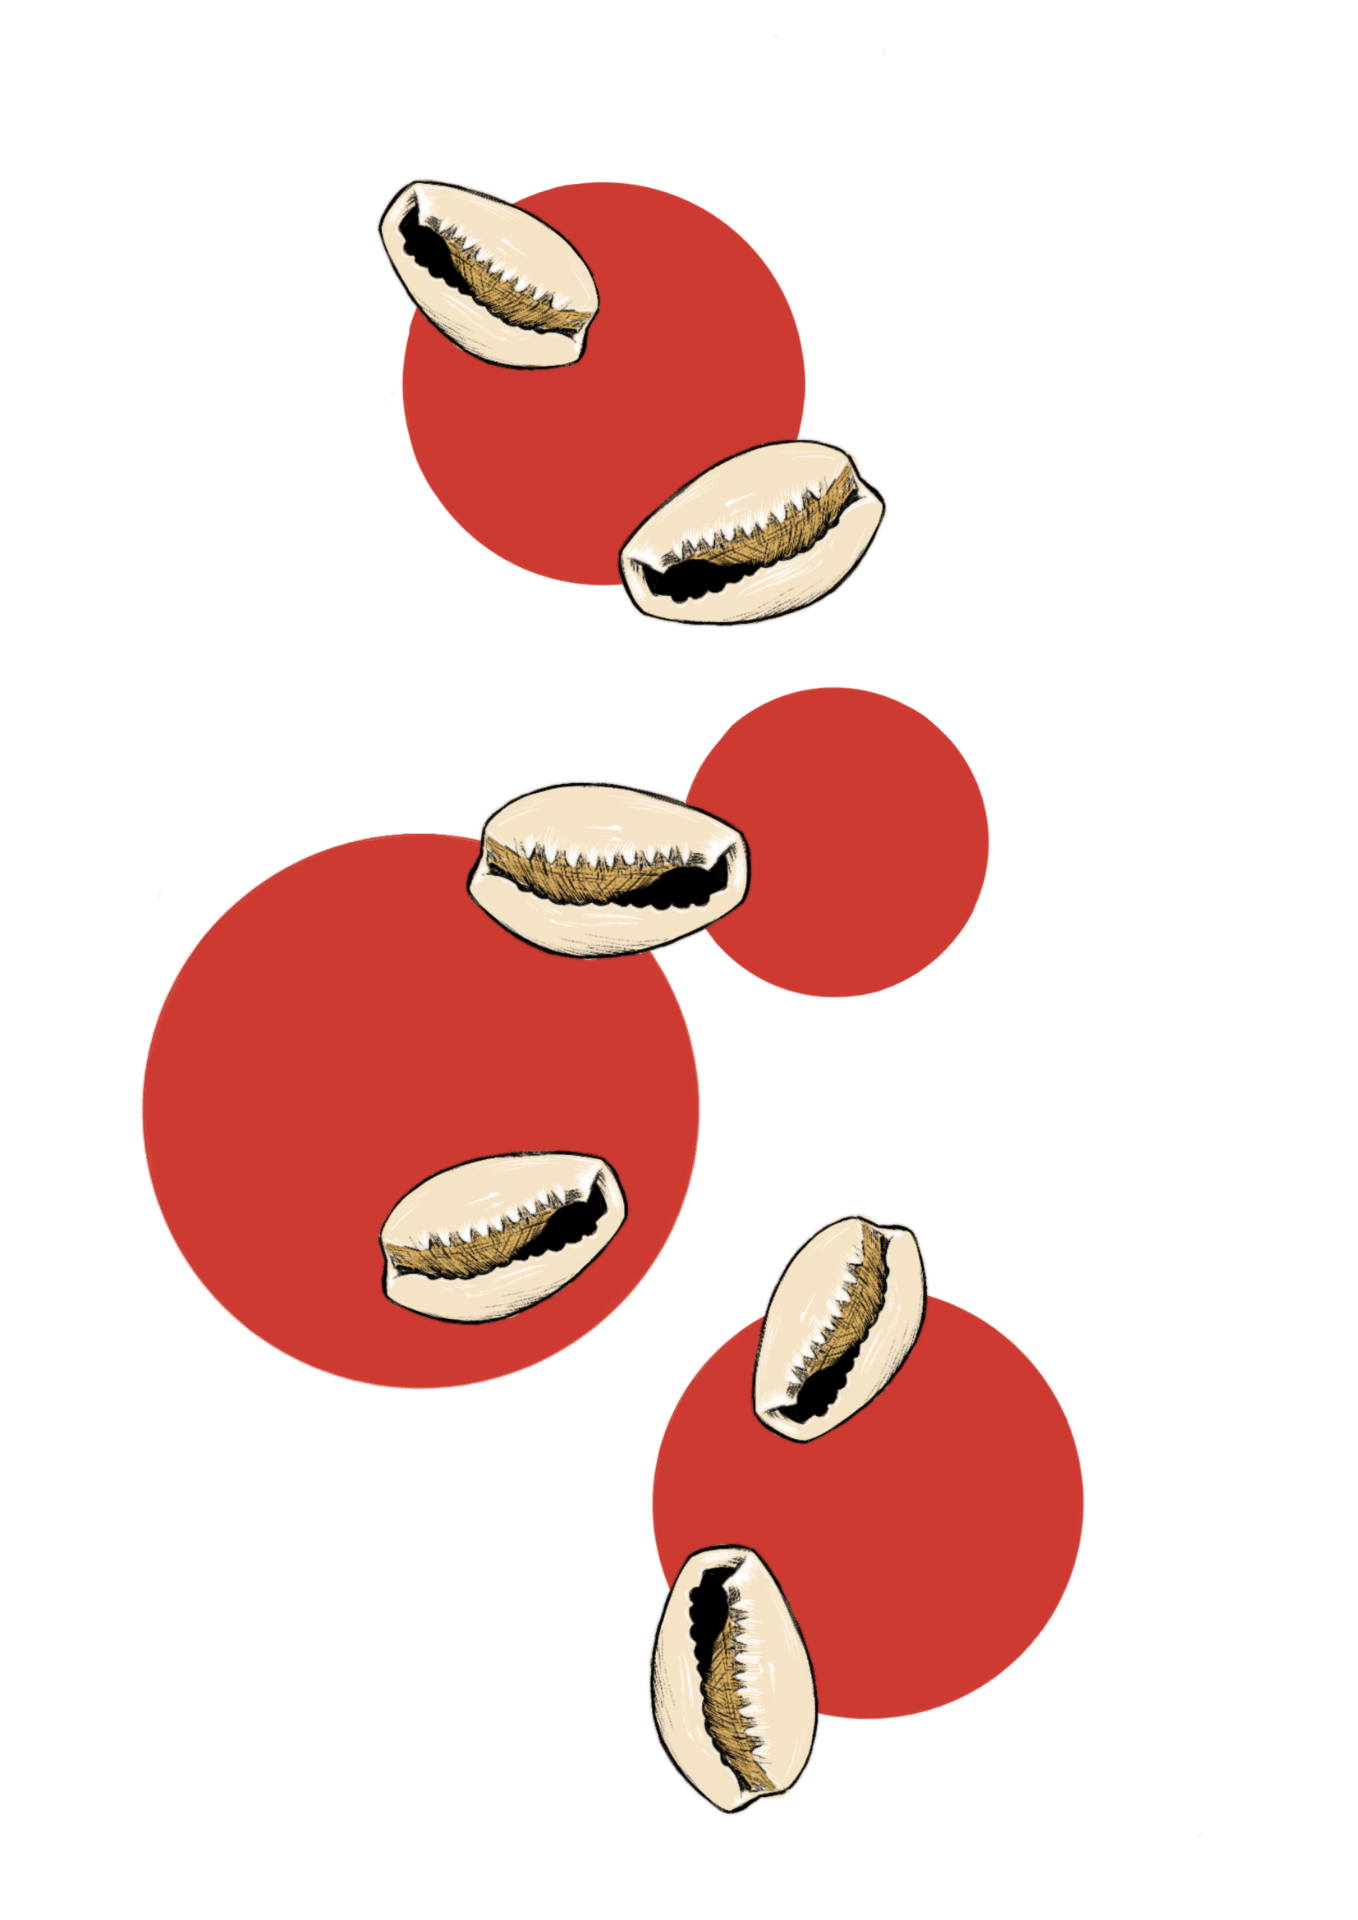 digital art of falling cowry shells among red circles